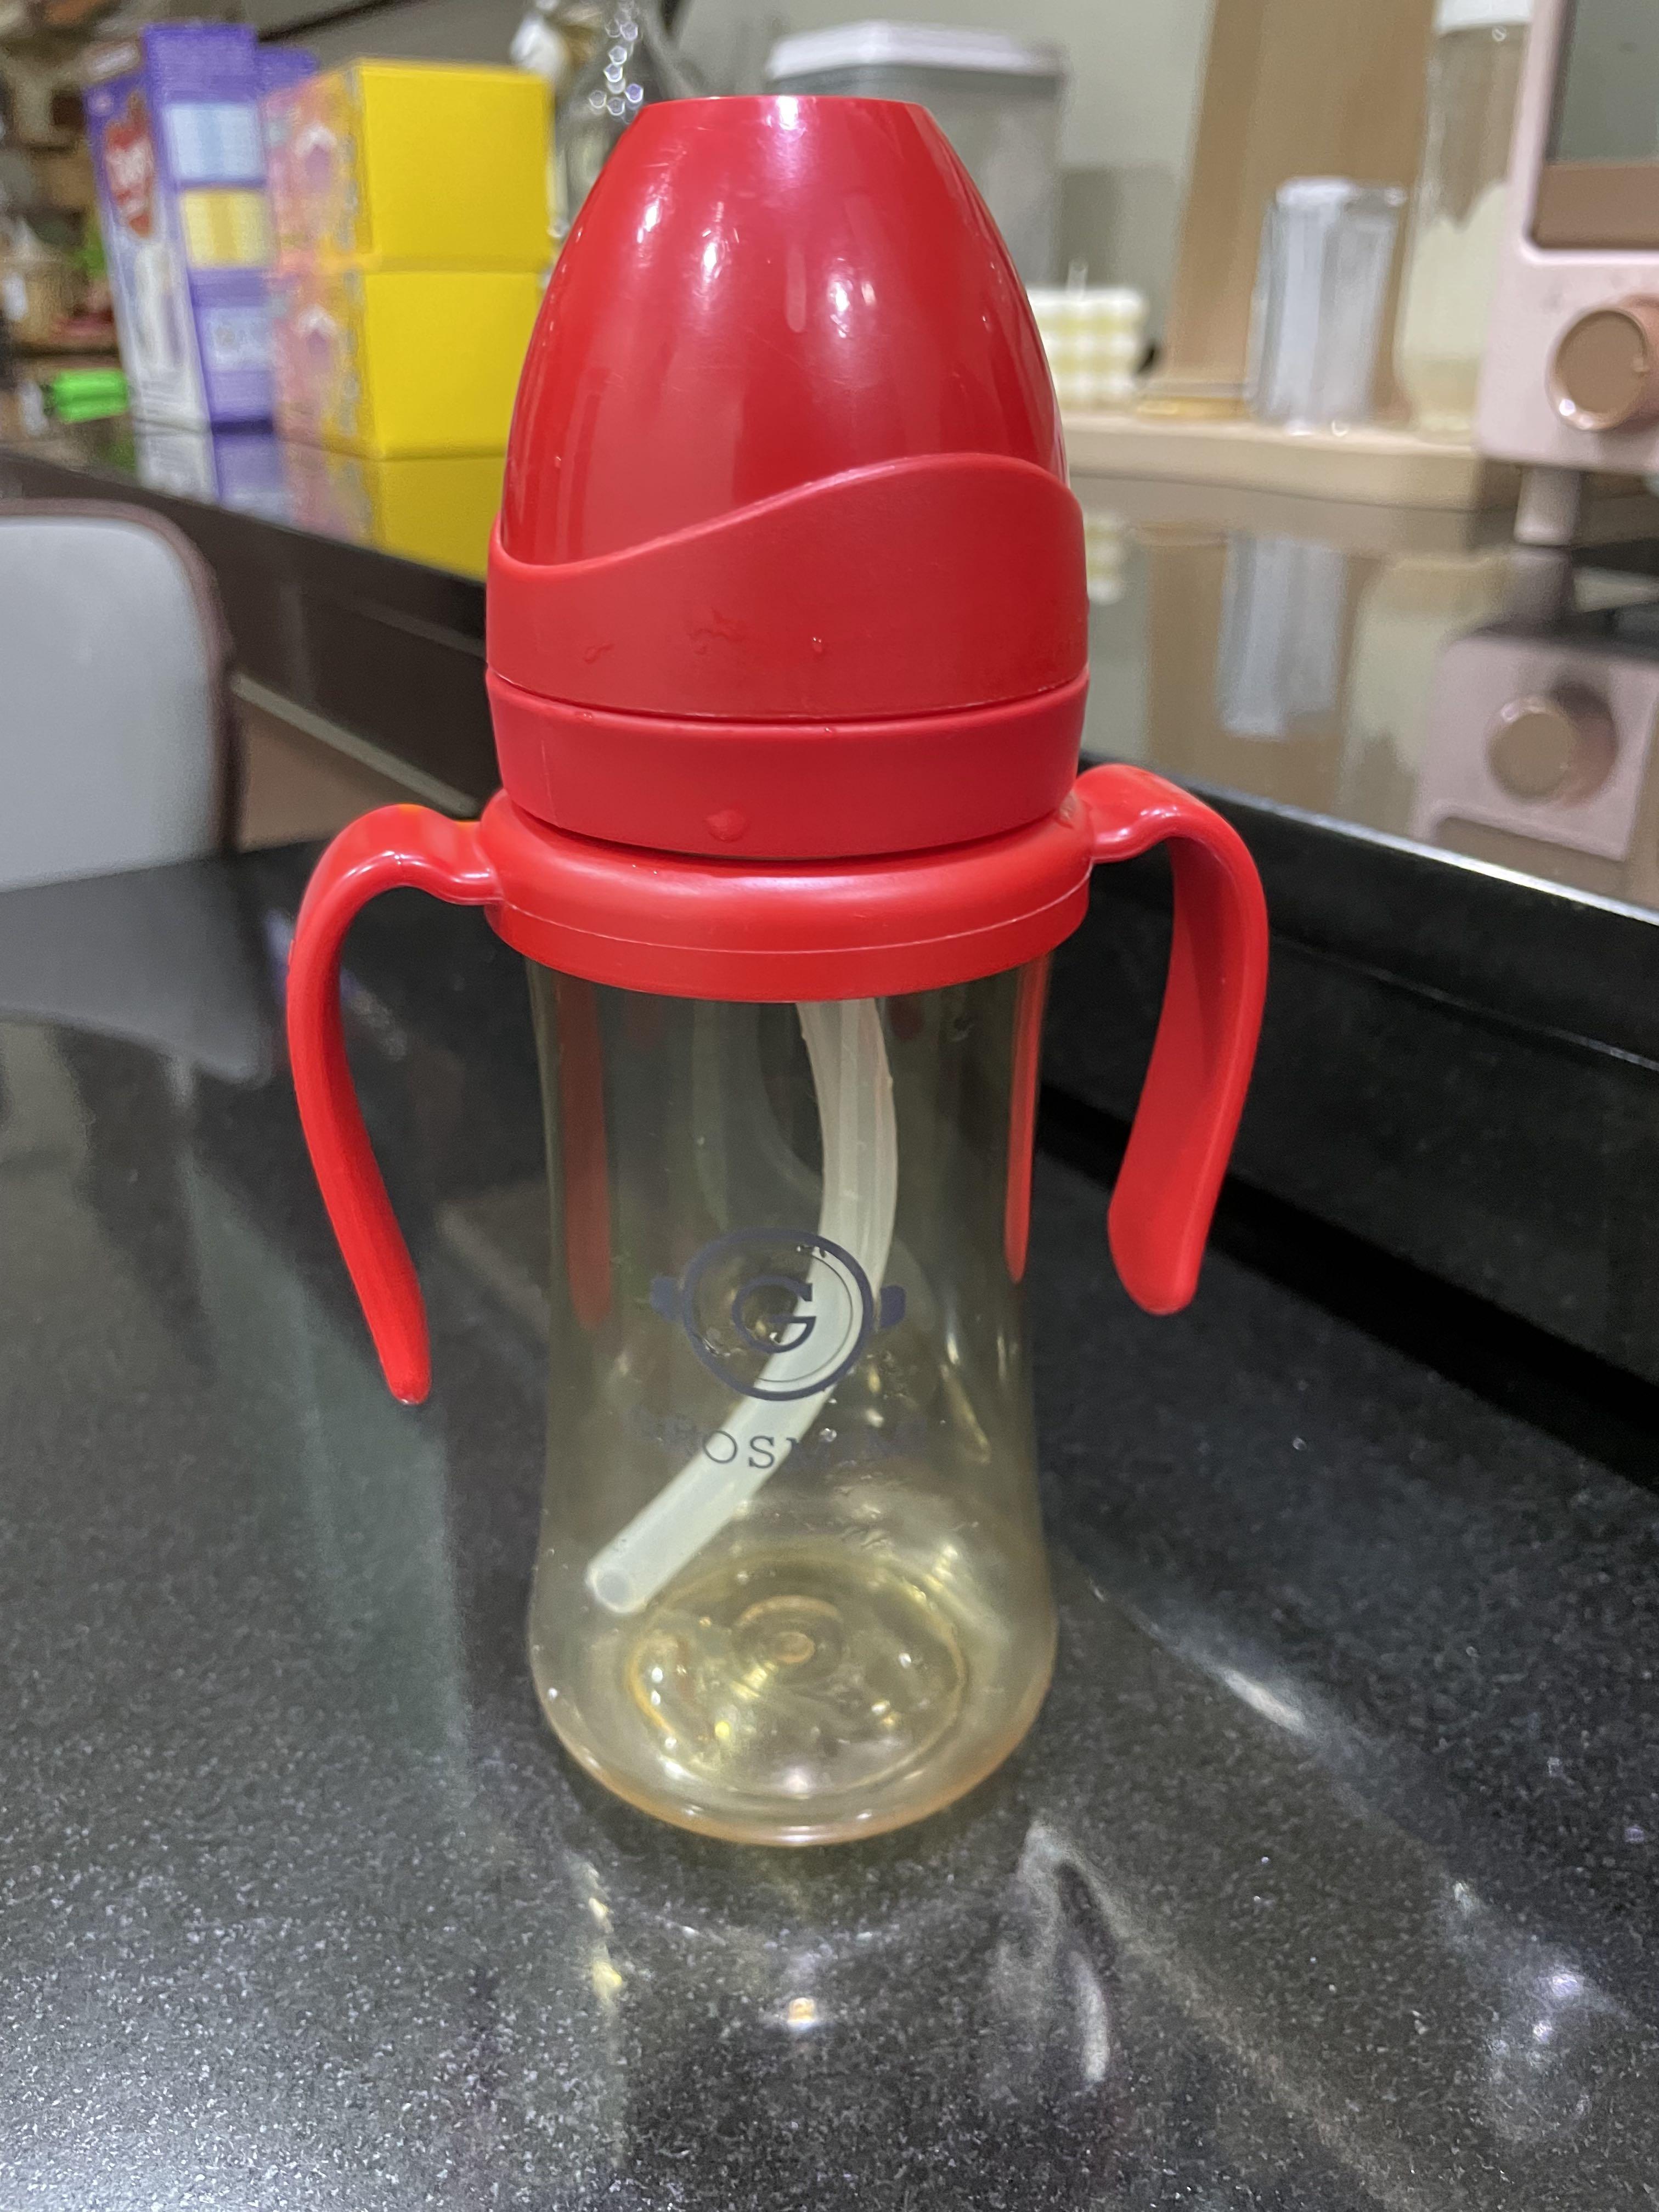 Grosmimi straw cup/ bottle 300ml (RED), Babies & Kids, Nursing